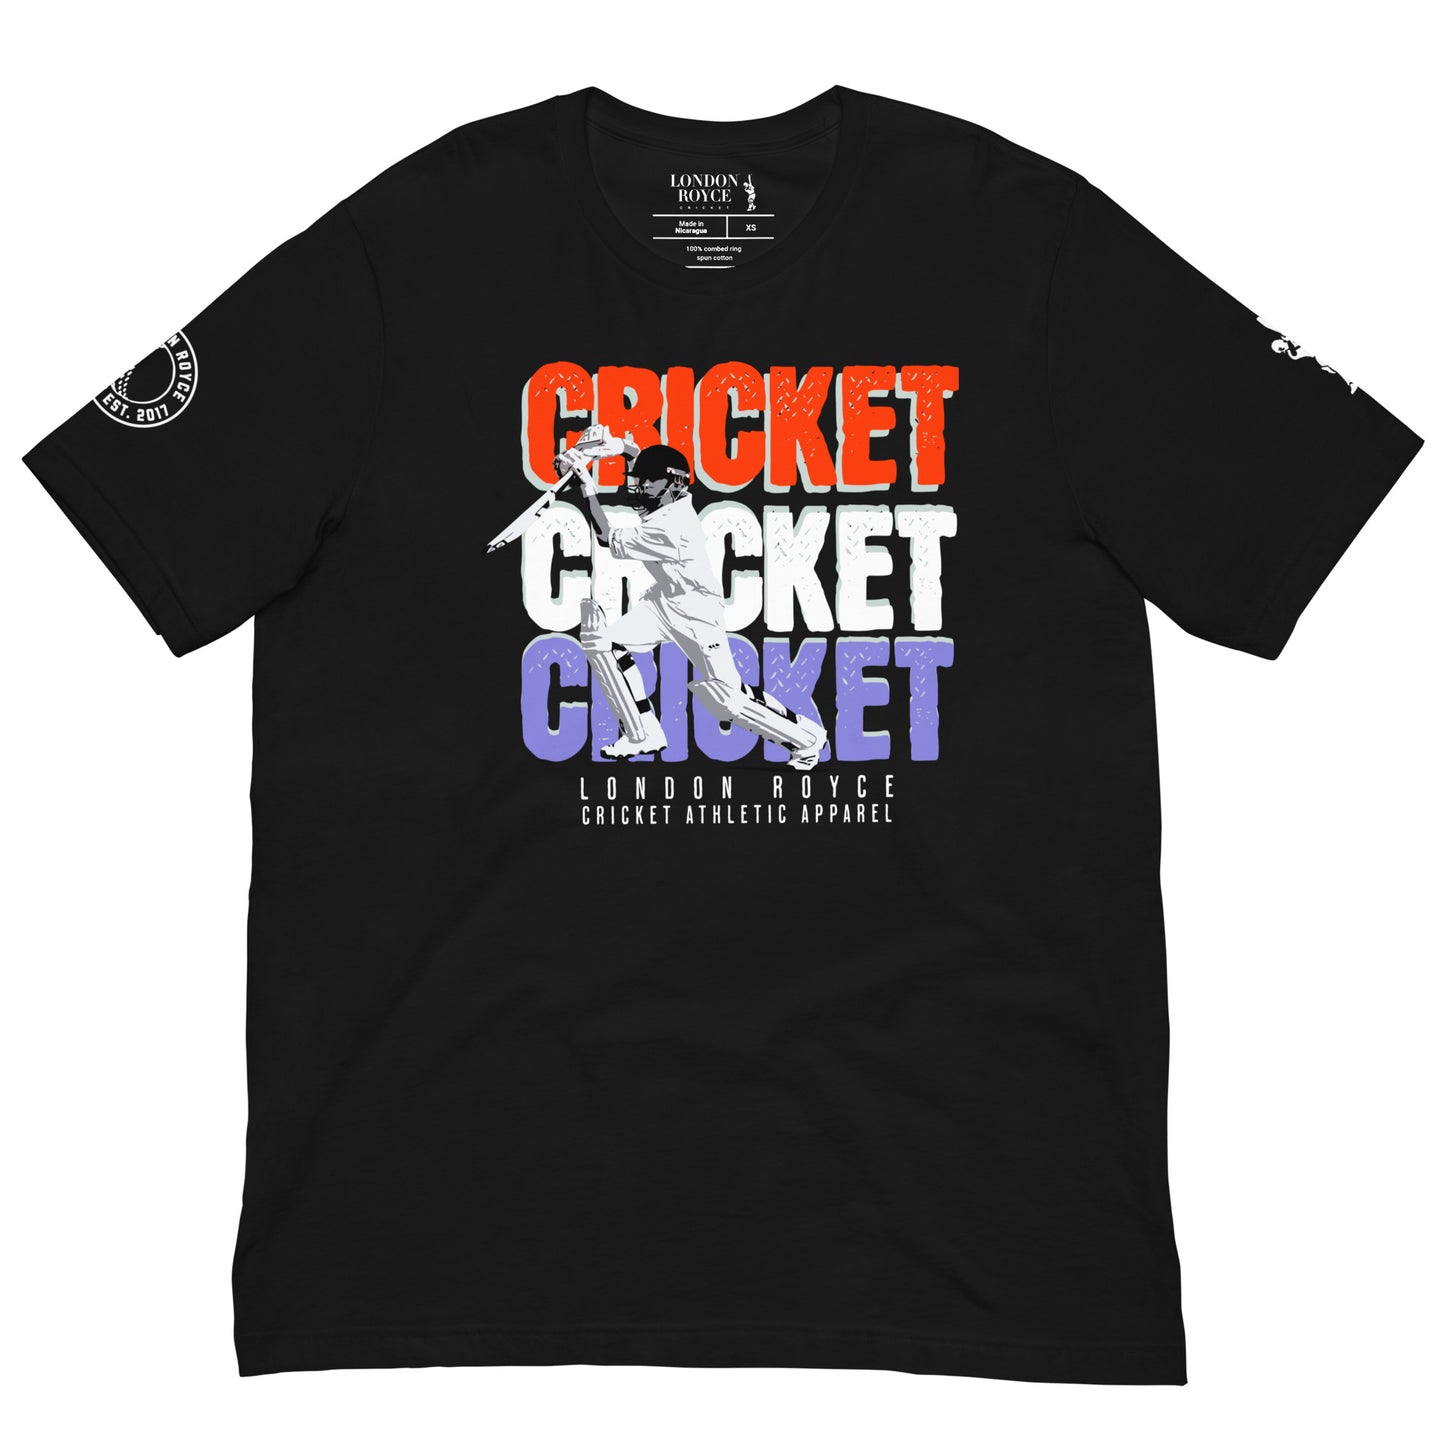 Triple Cricket Graphic T-shirt